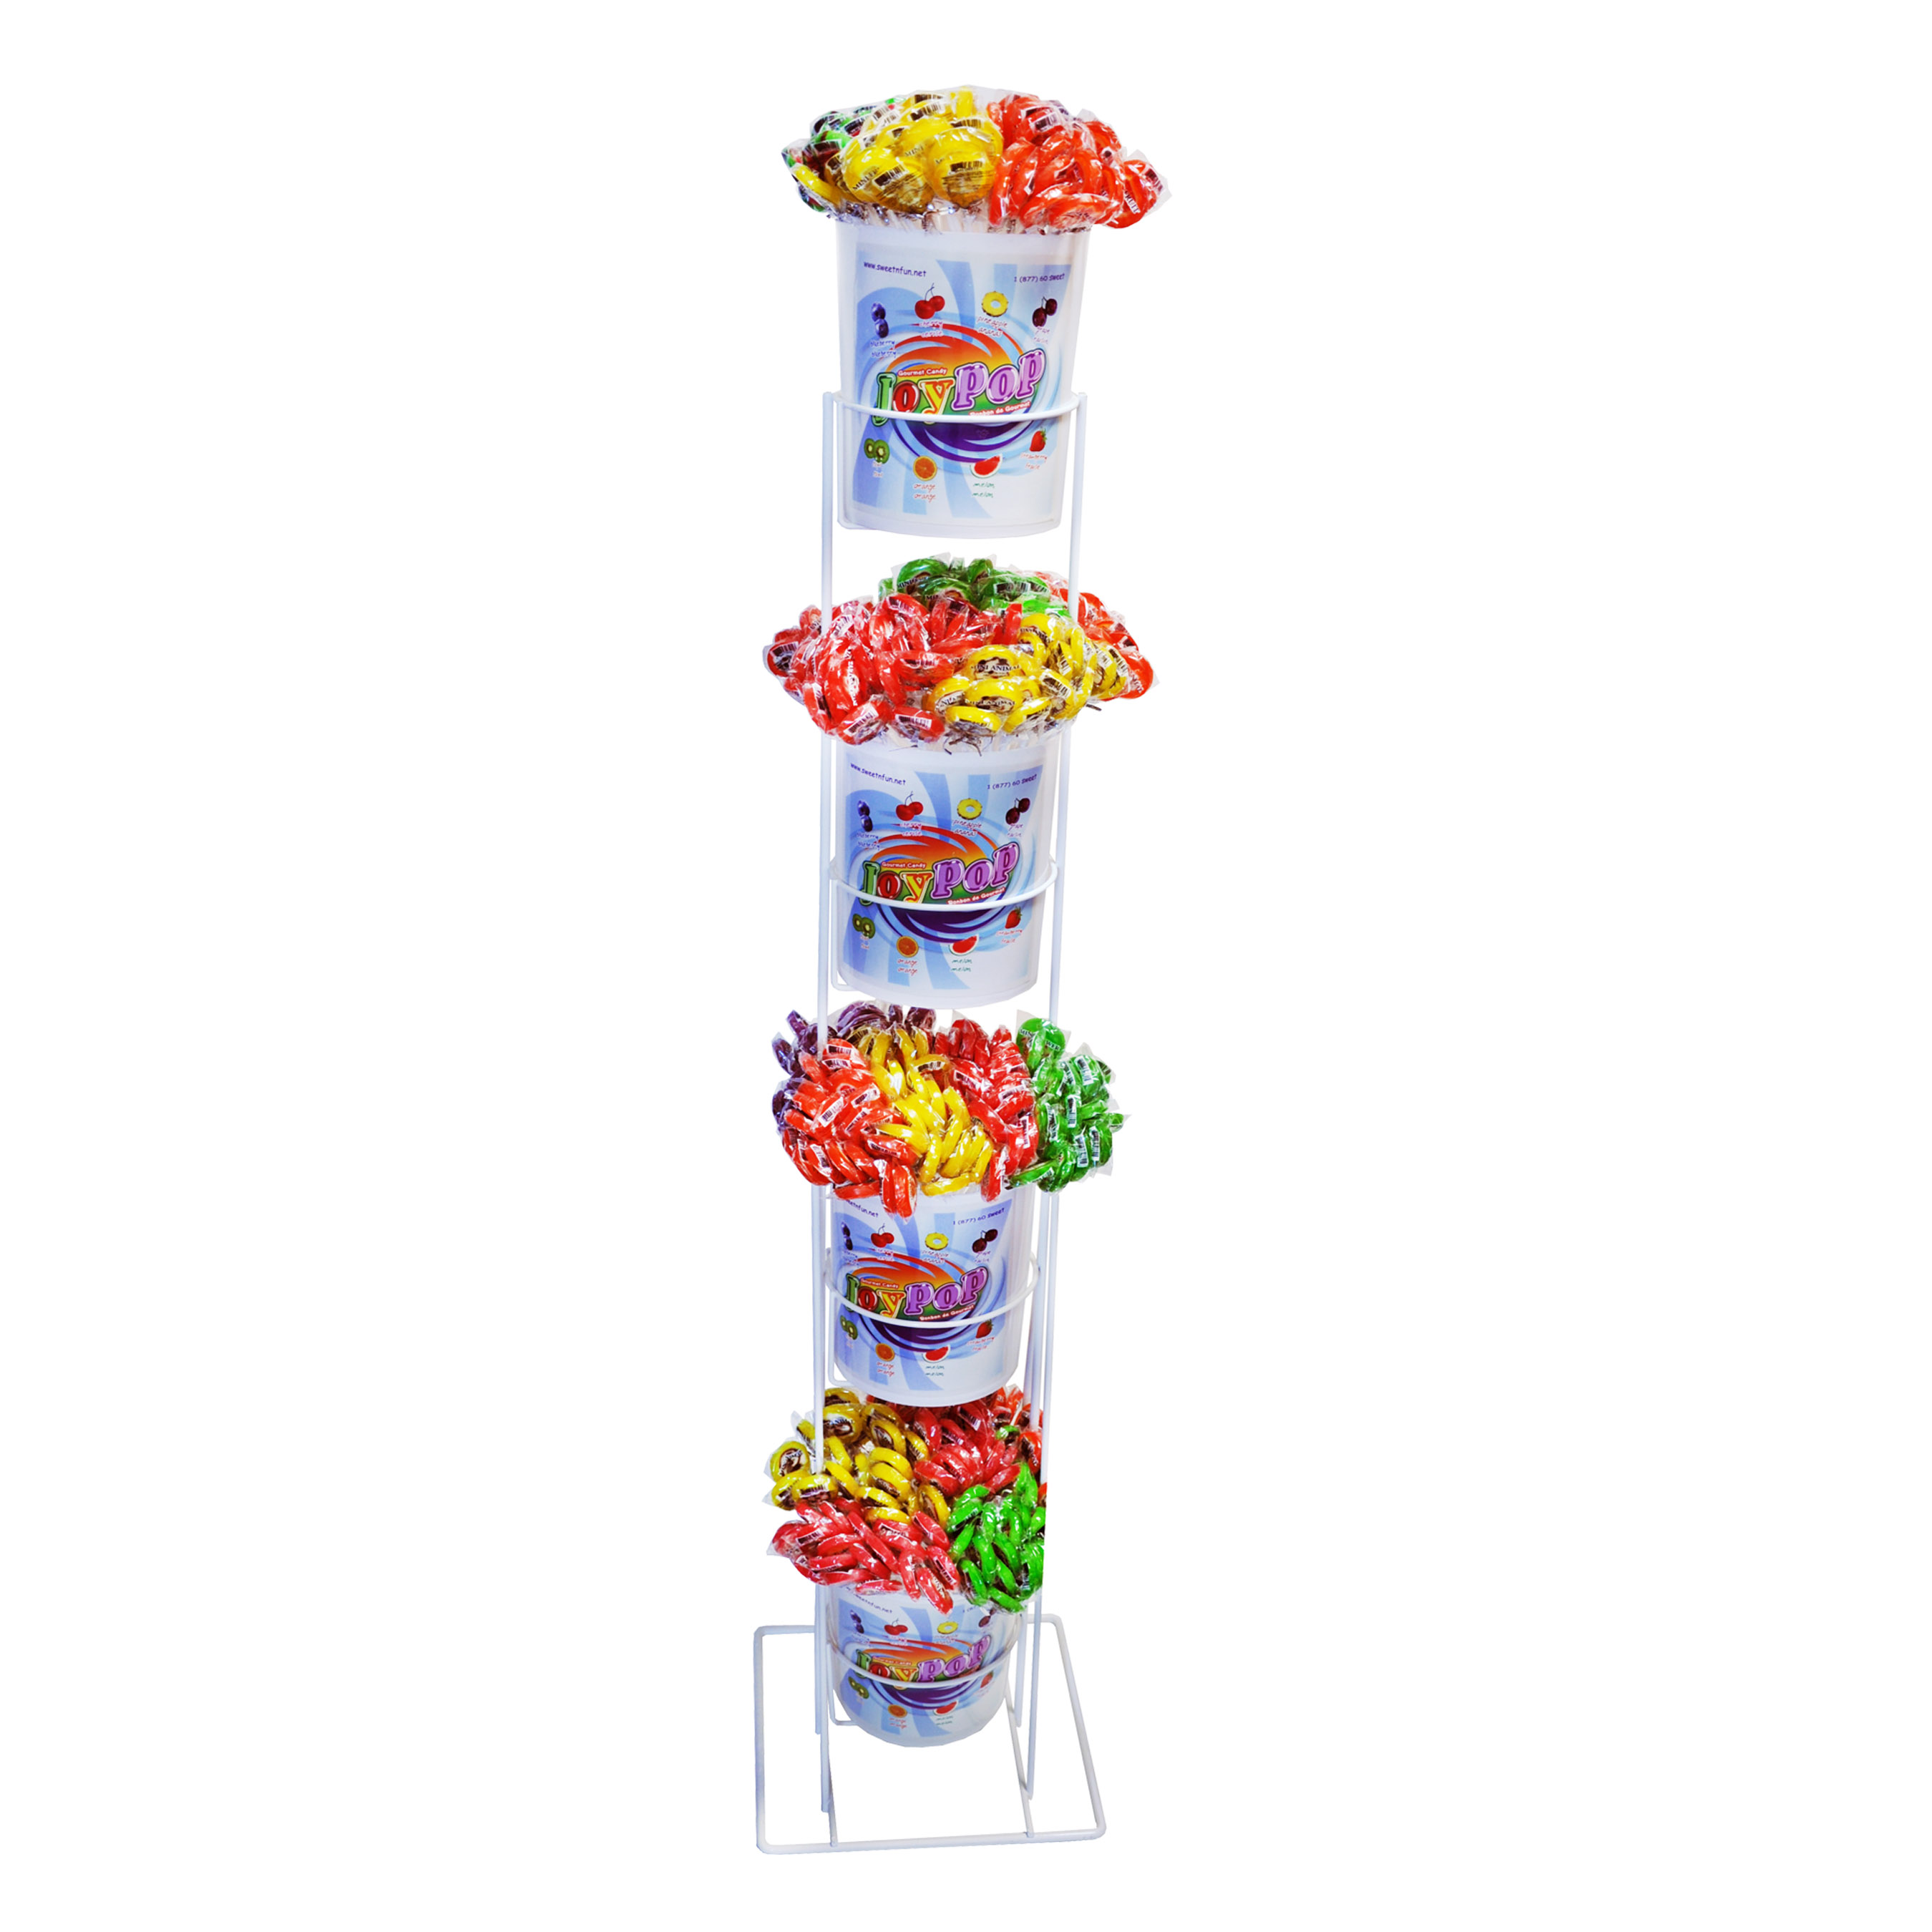 four levels of side buckets for long mini stick lollipops, or any alternate lollipops